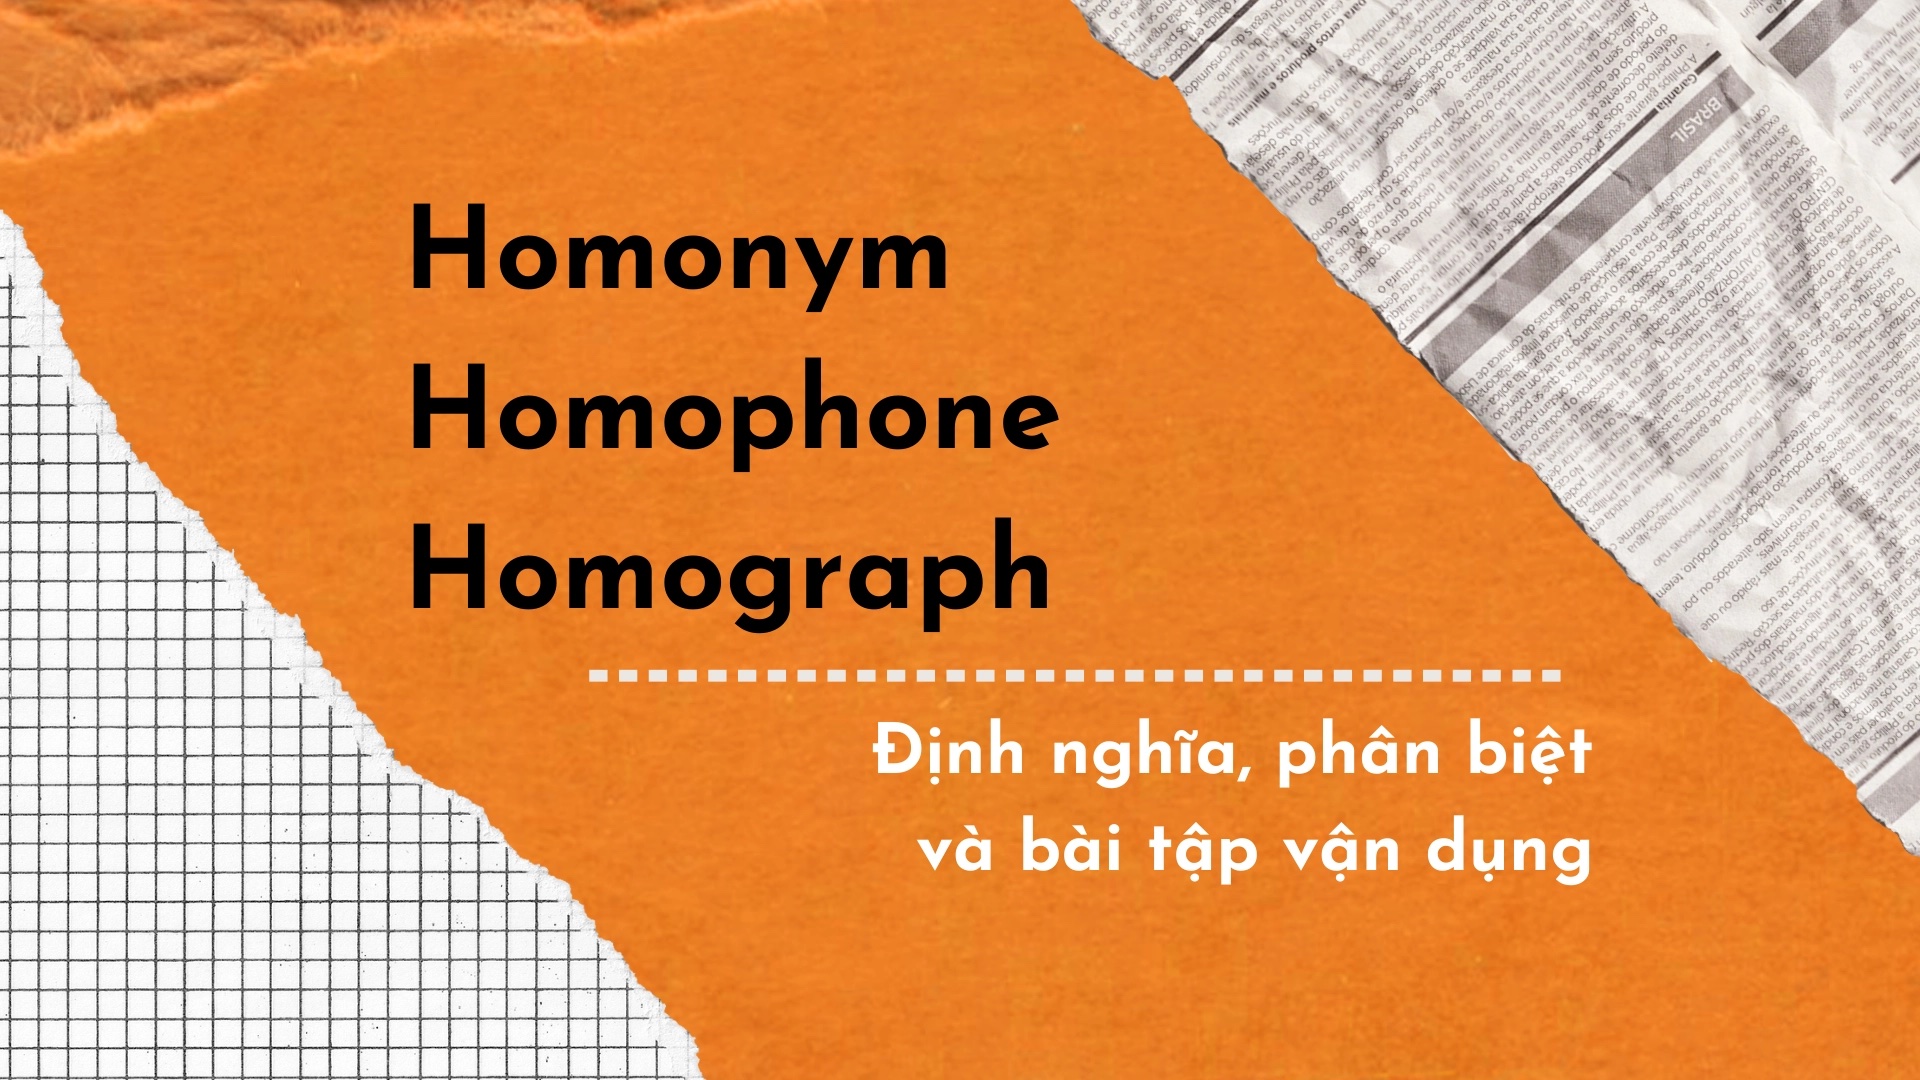 homonym homophone homograph dinh nghia phan biet va bai tap van dung